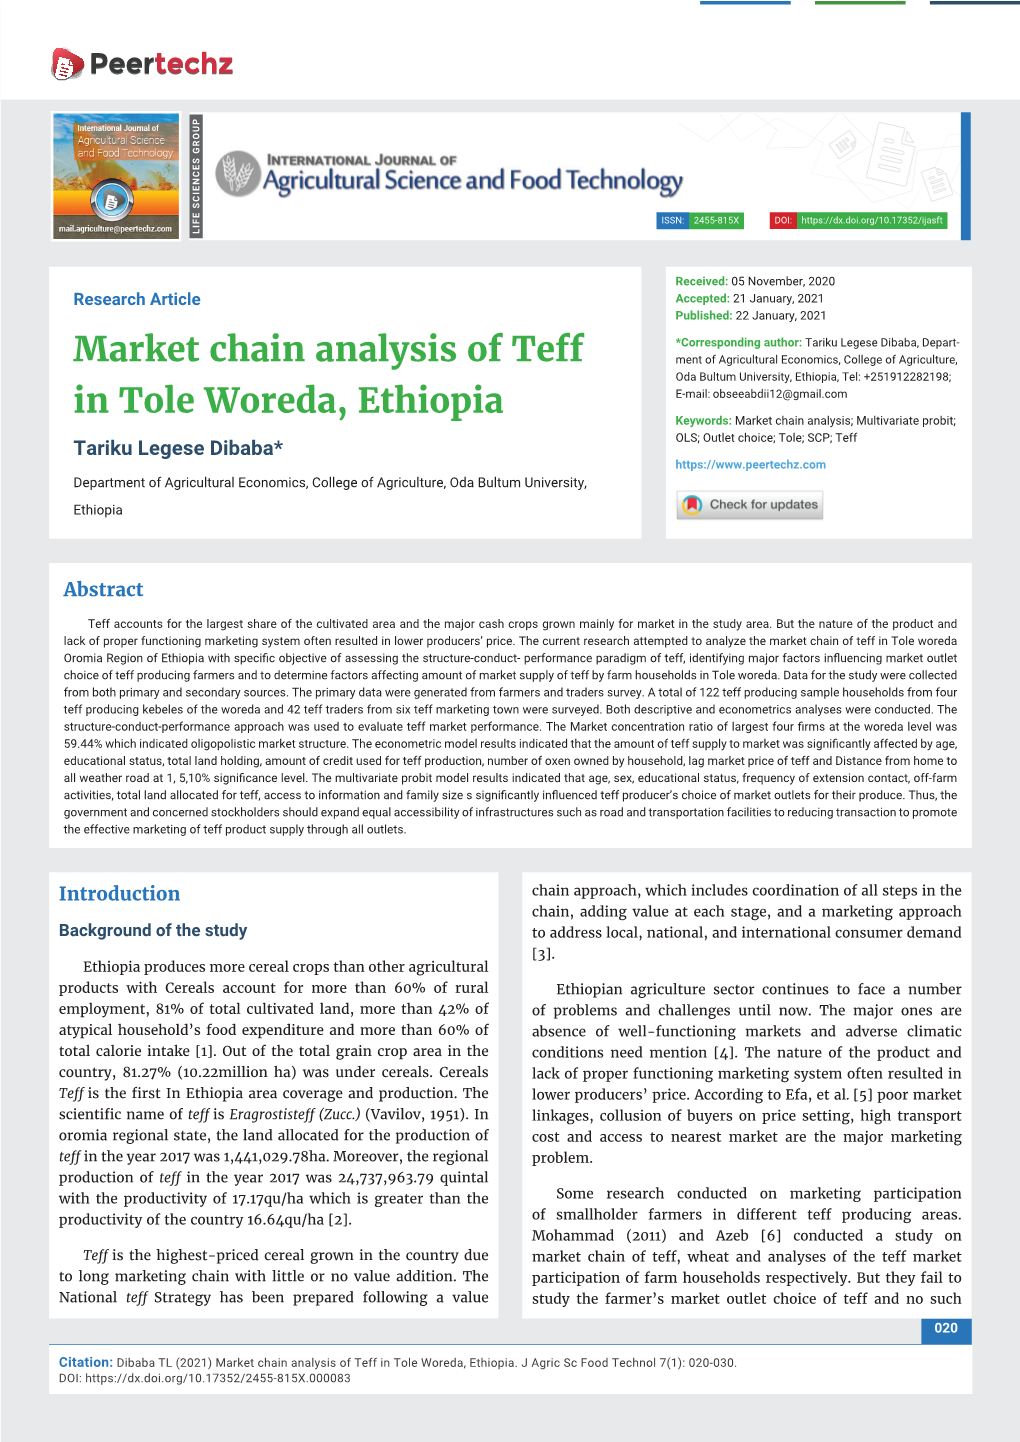 Market Chain Analysis of Teff in Tole Woreda, Ethiopia